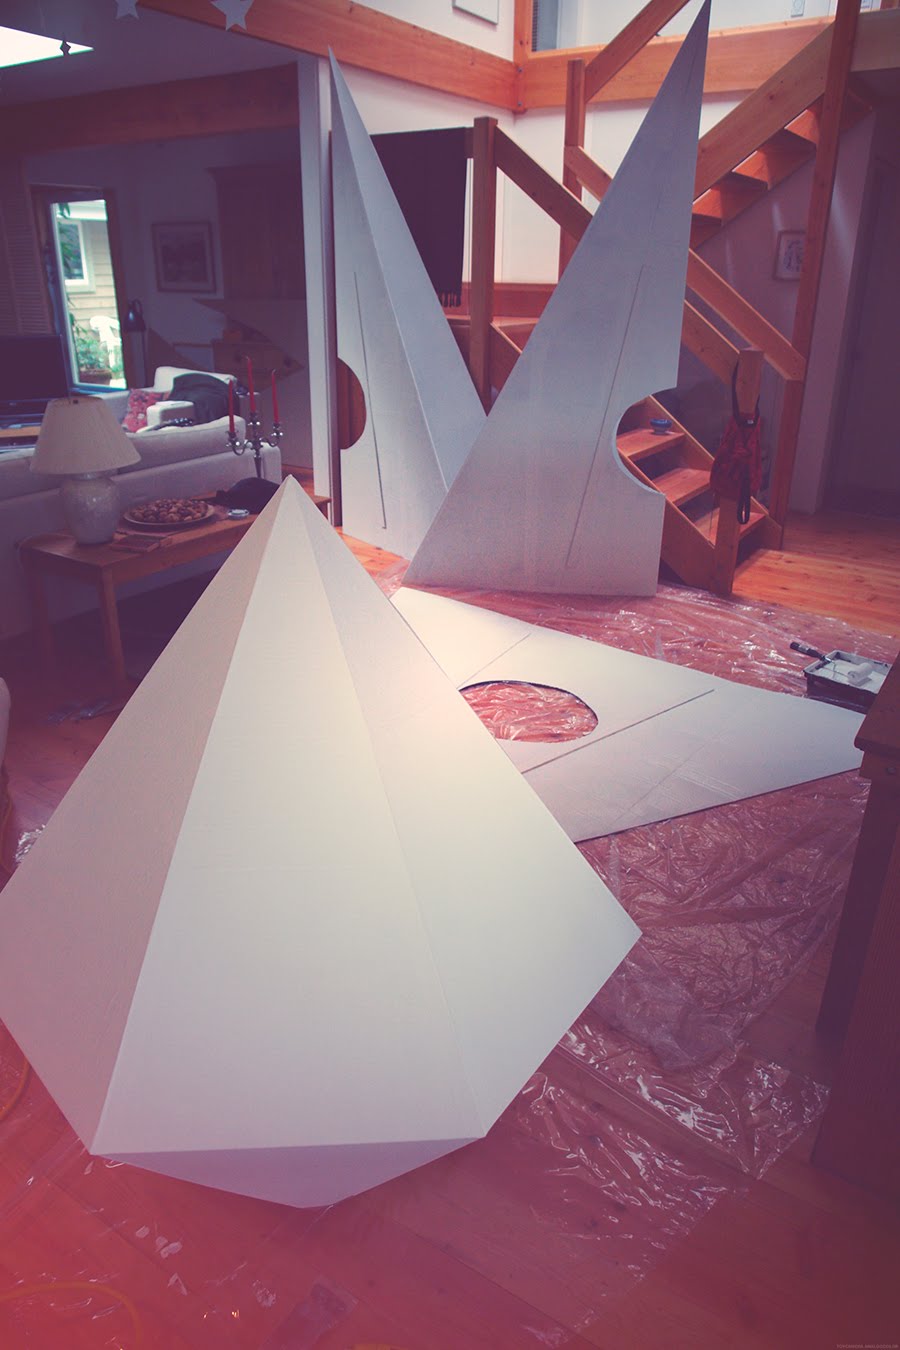 ADRIEN DEGGAN'S BLOG: Three Giant Paper Airplanes and a Sapphire.